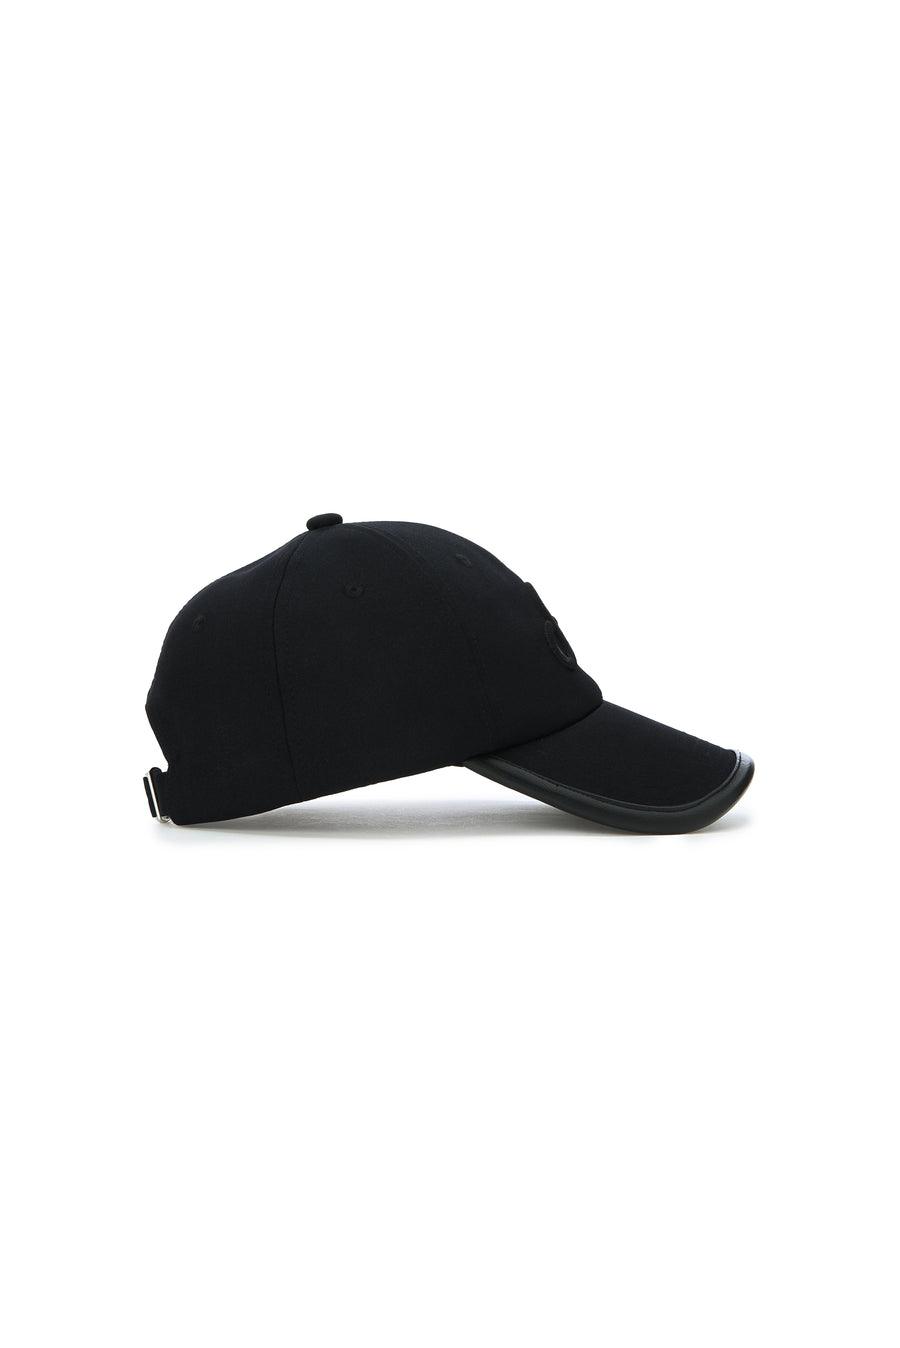 TRIMMED CAP (Black)